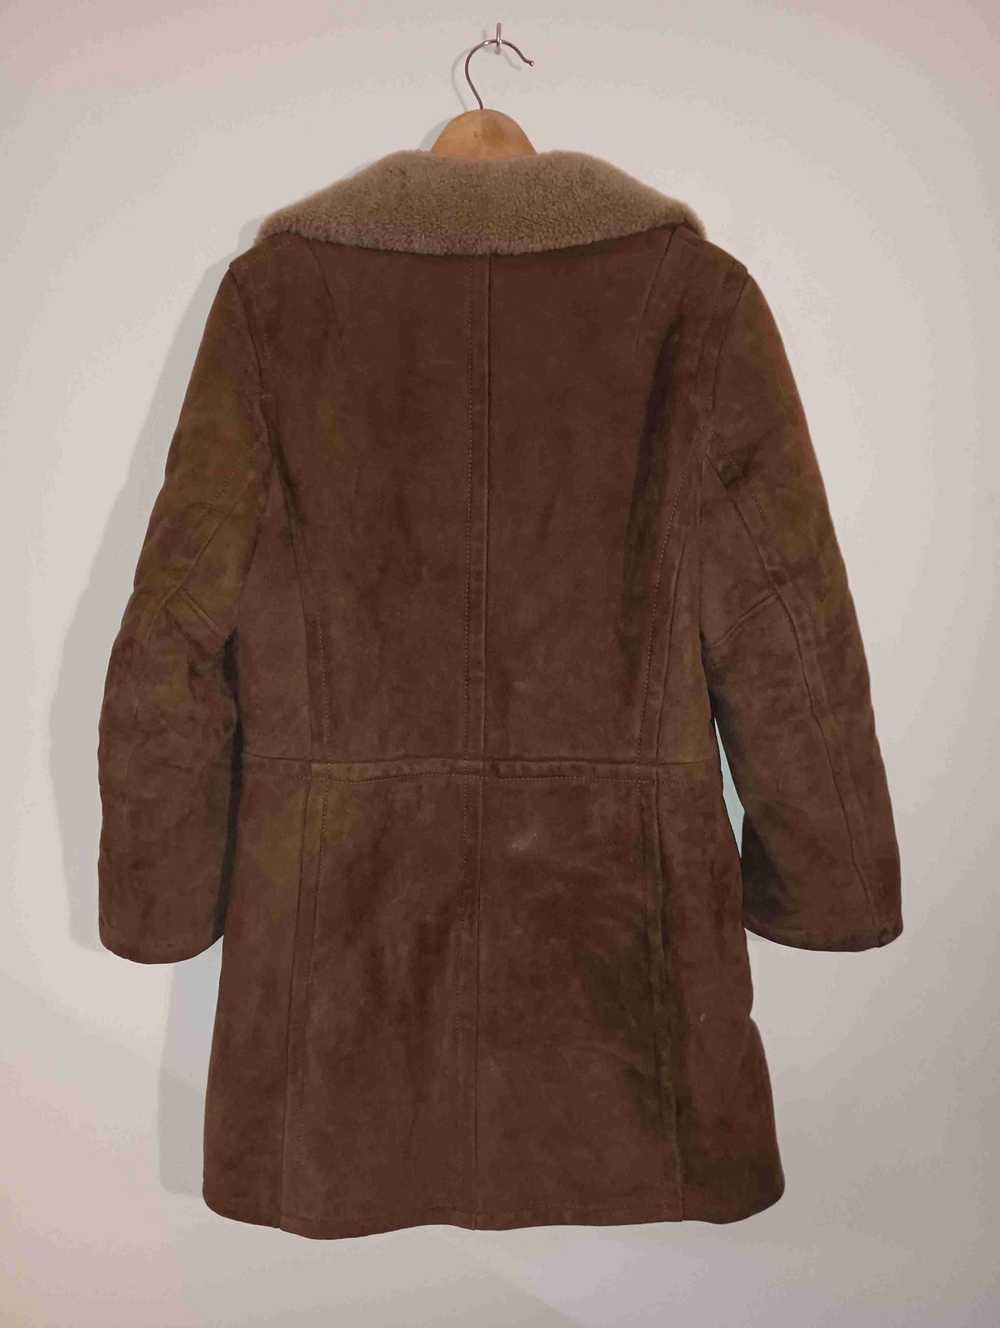 Shearling coat - Sheepskin coat from the 70s - image 2